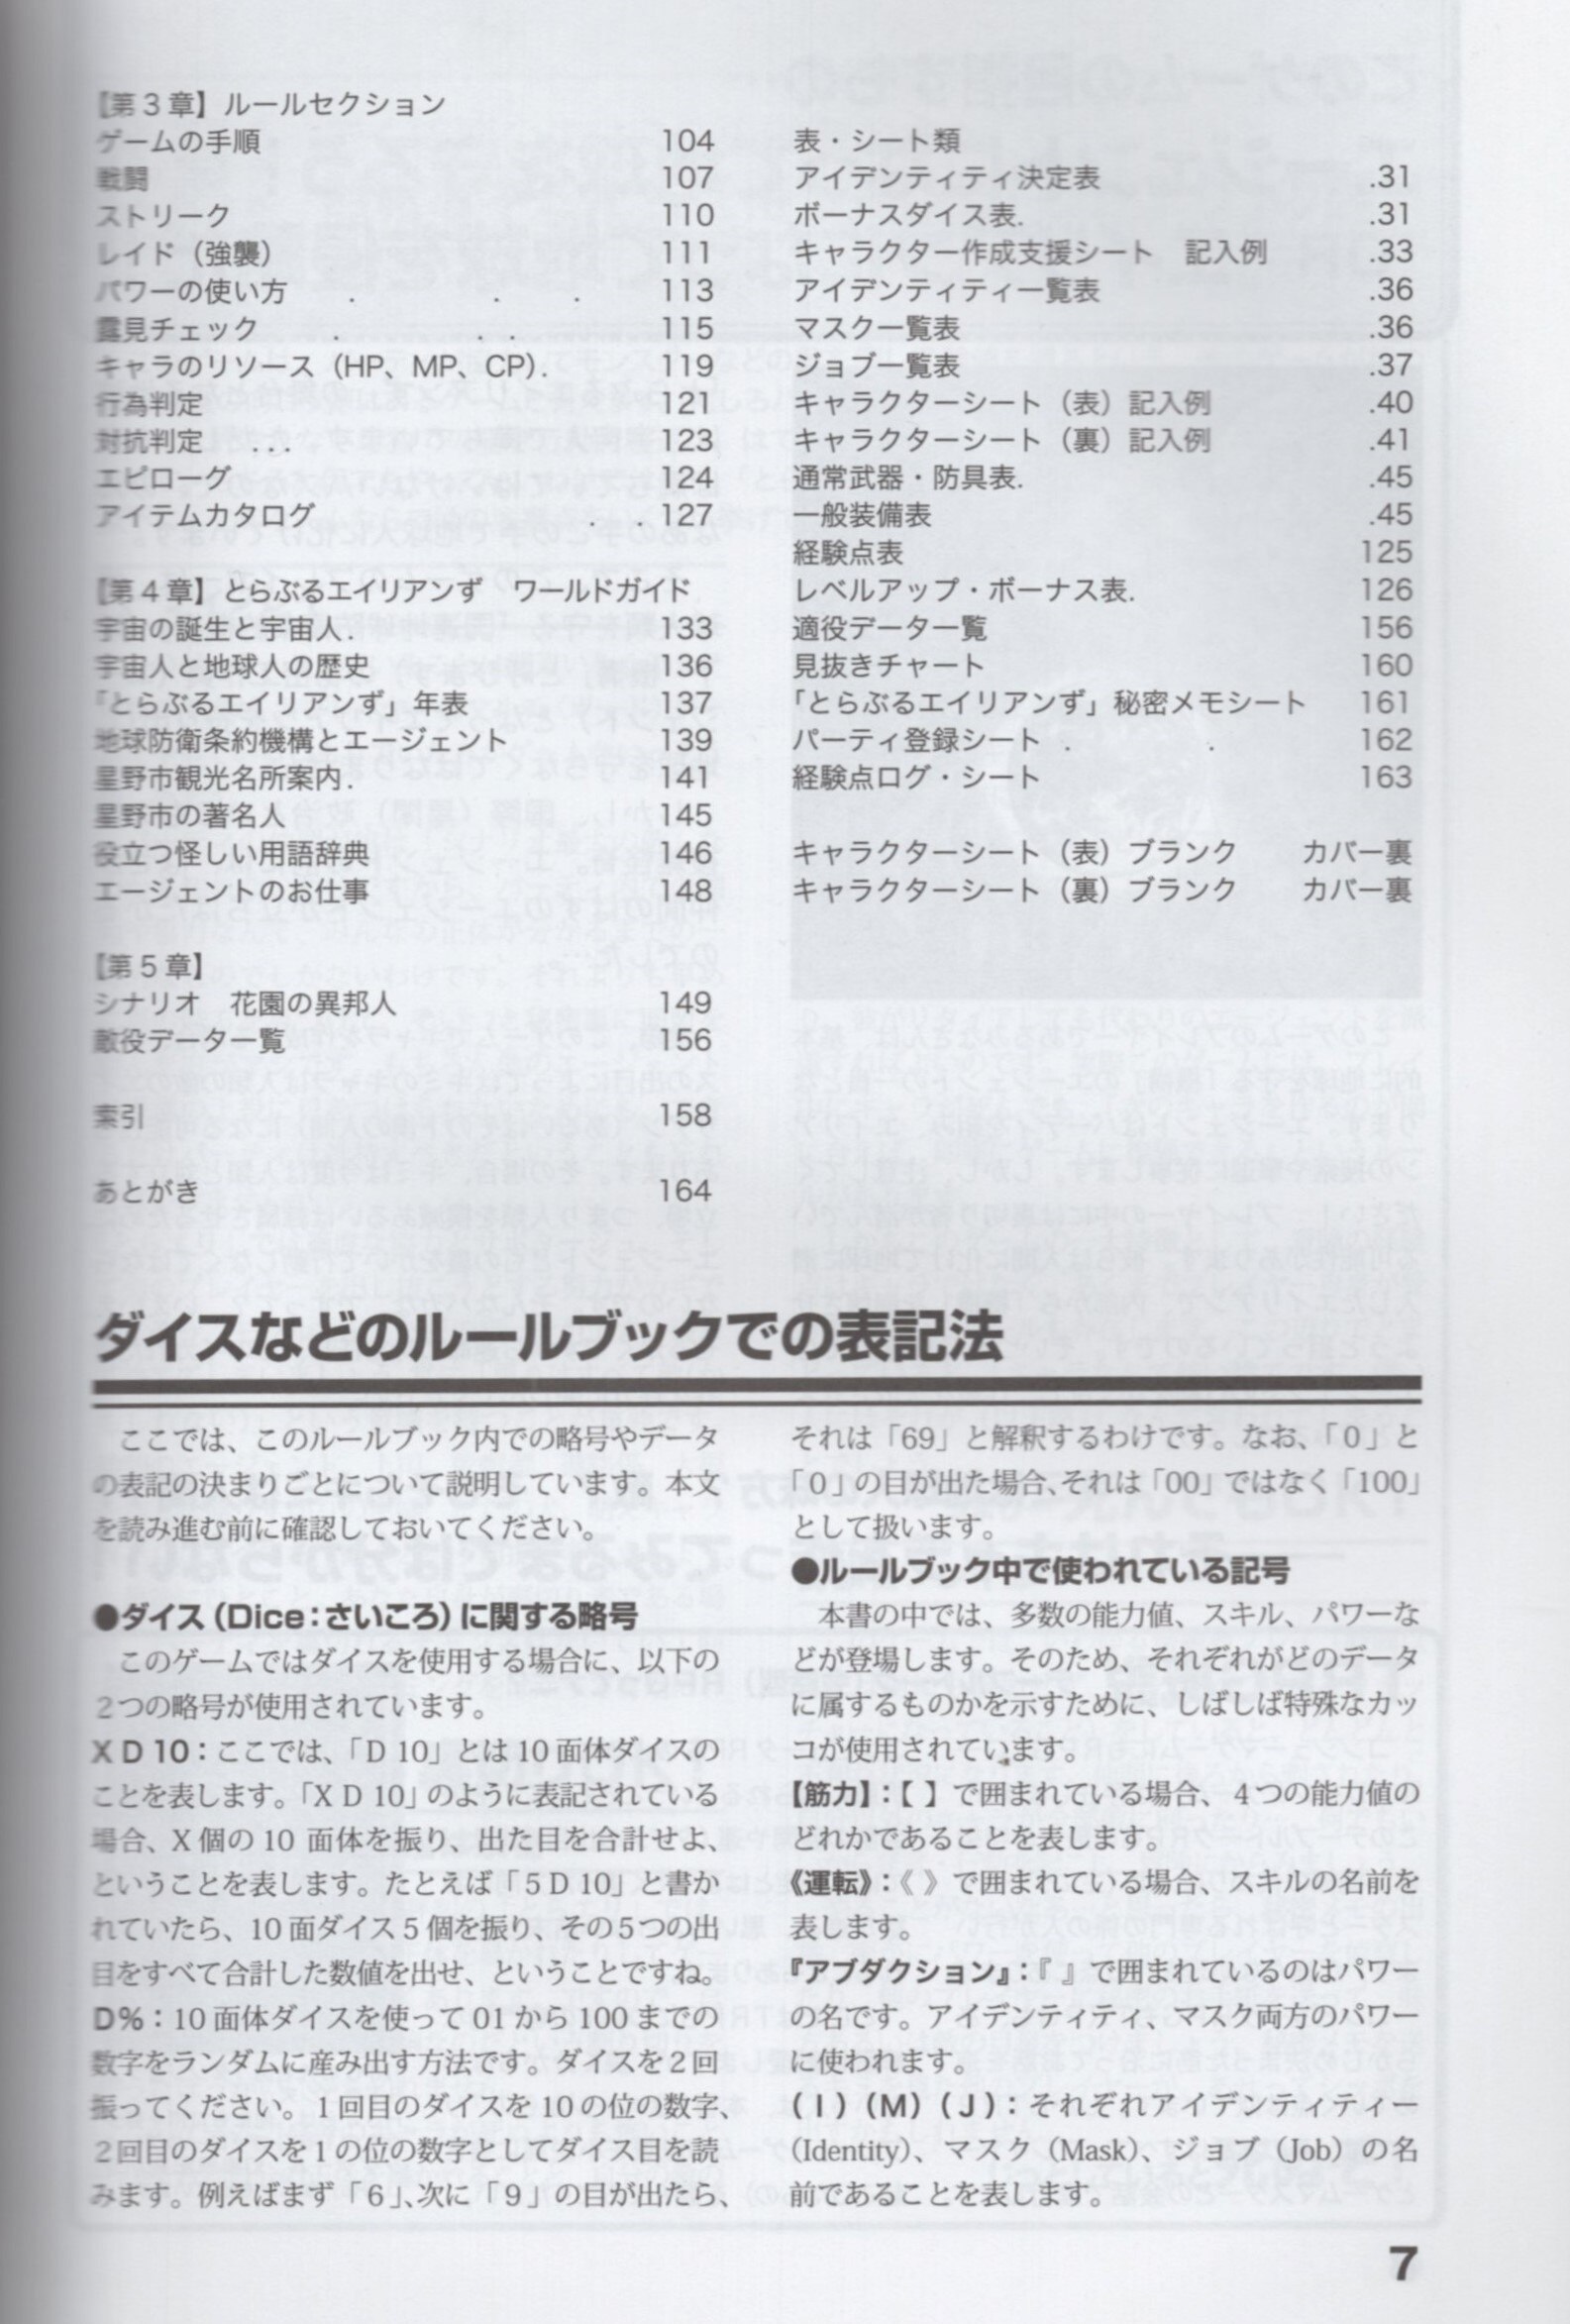 Hobby Japan Akira Waguri Akira Waguri Akira Waguri Basic Rulebook Mandarake Online Shop